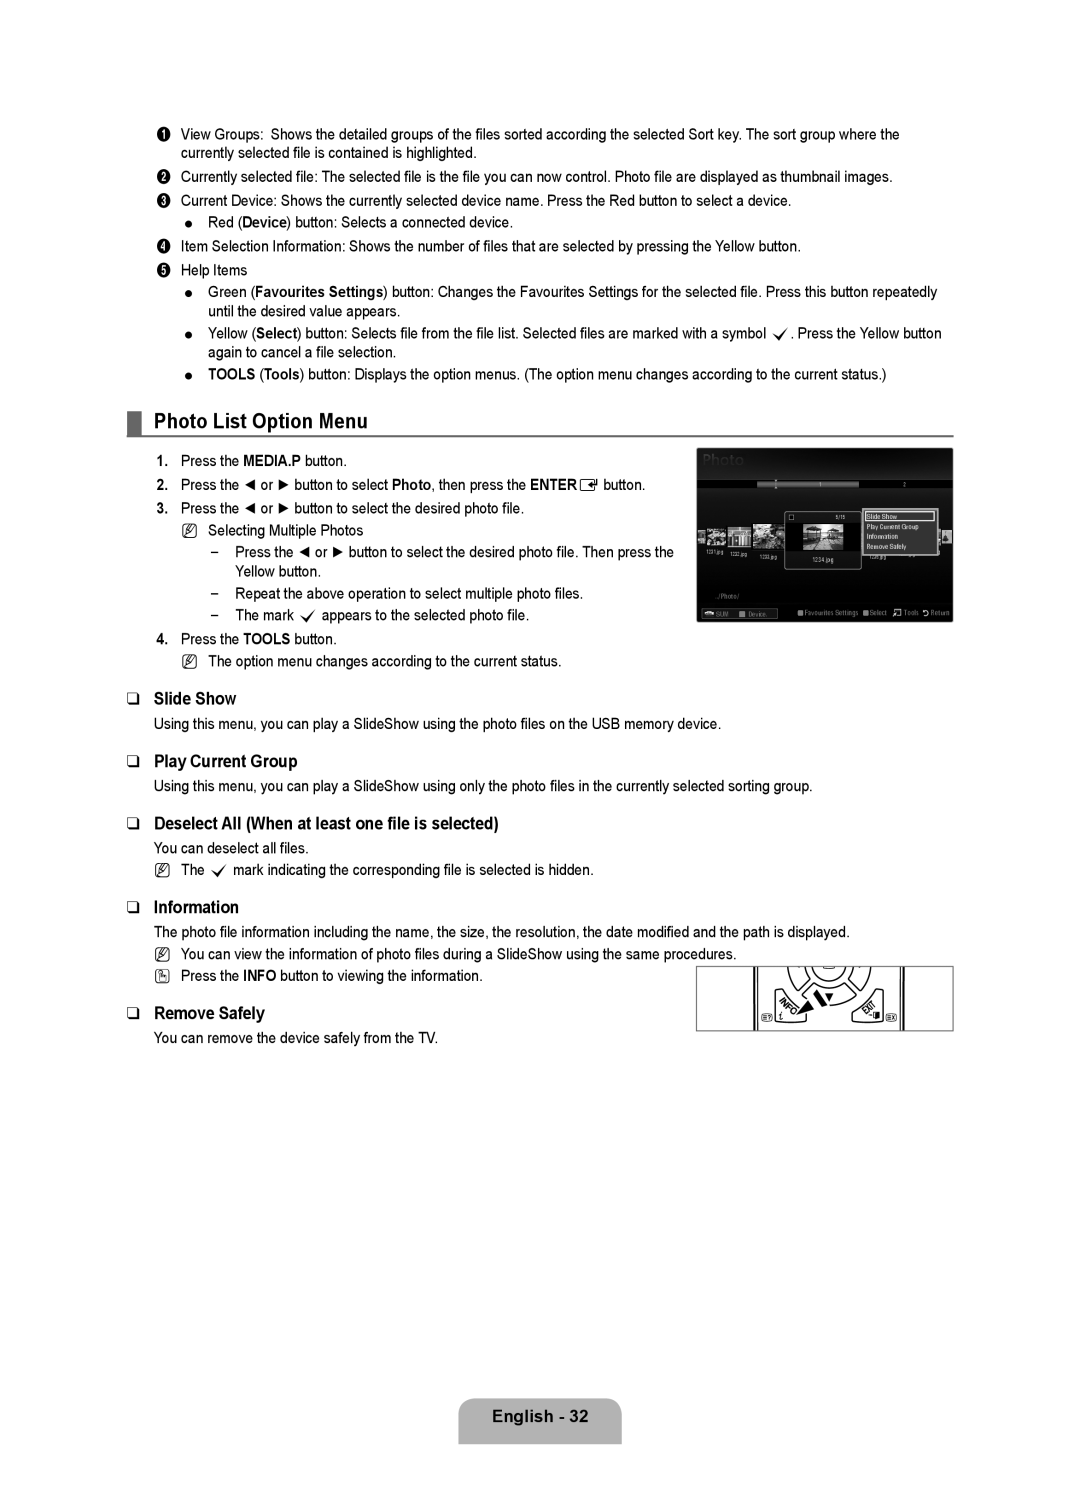 Samsung UE40B6000VWXZG manual Photo List Option Menu, Slide Show, Play Current Group, Information, Remove Safely, English 